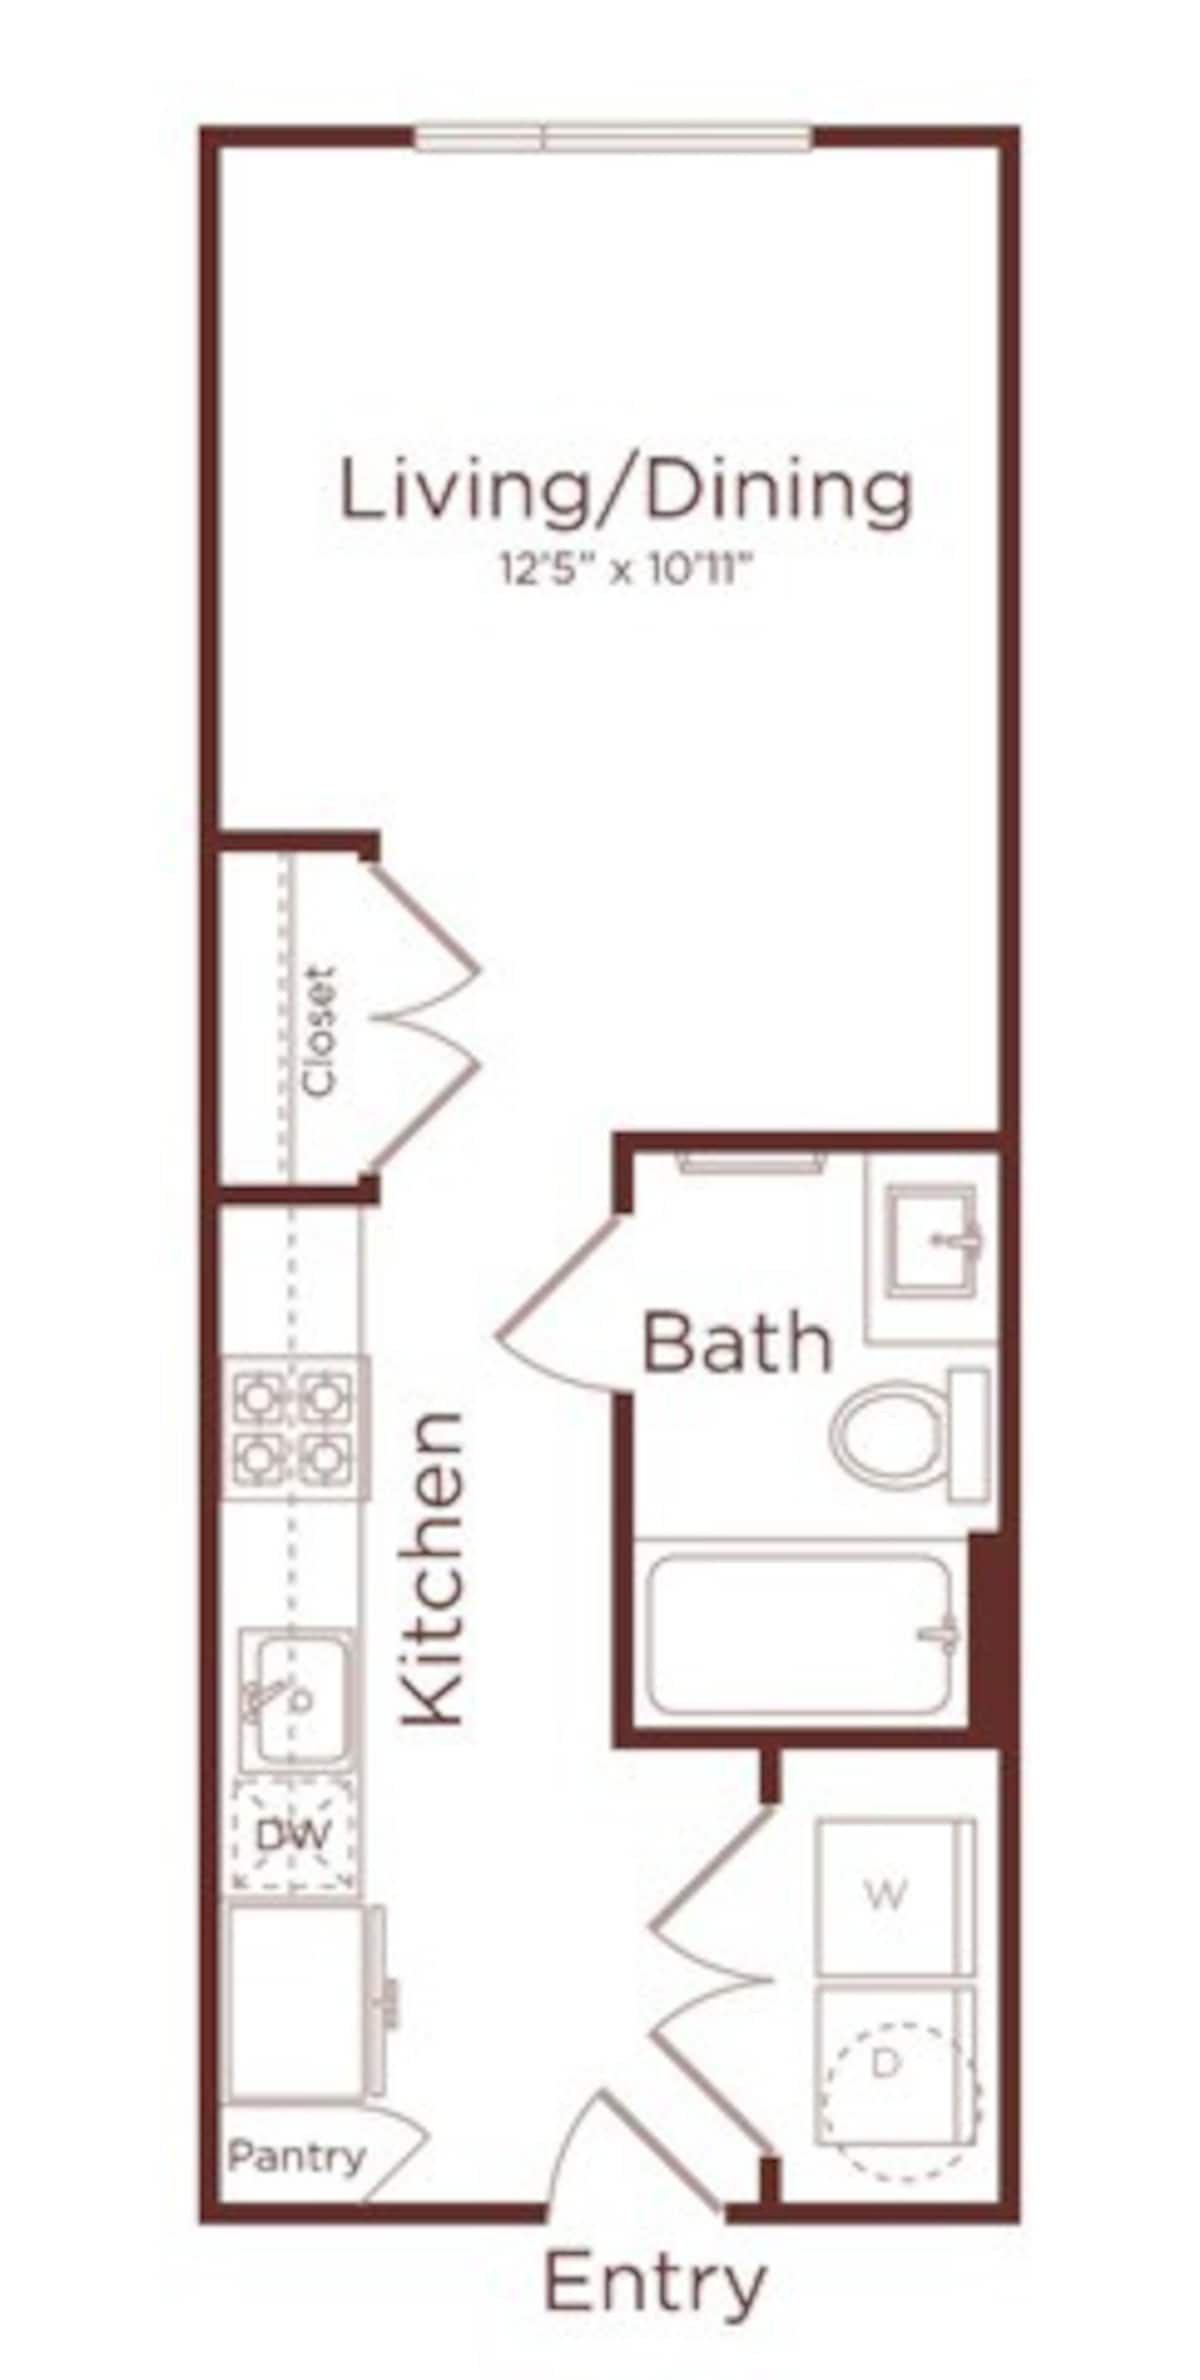 Floorplan diagram for A0, showing 1 bedroom